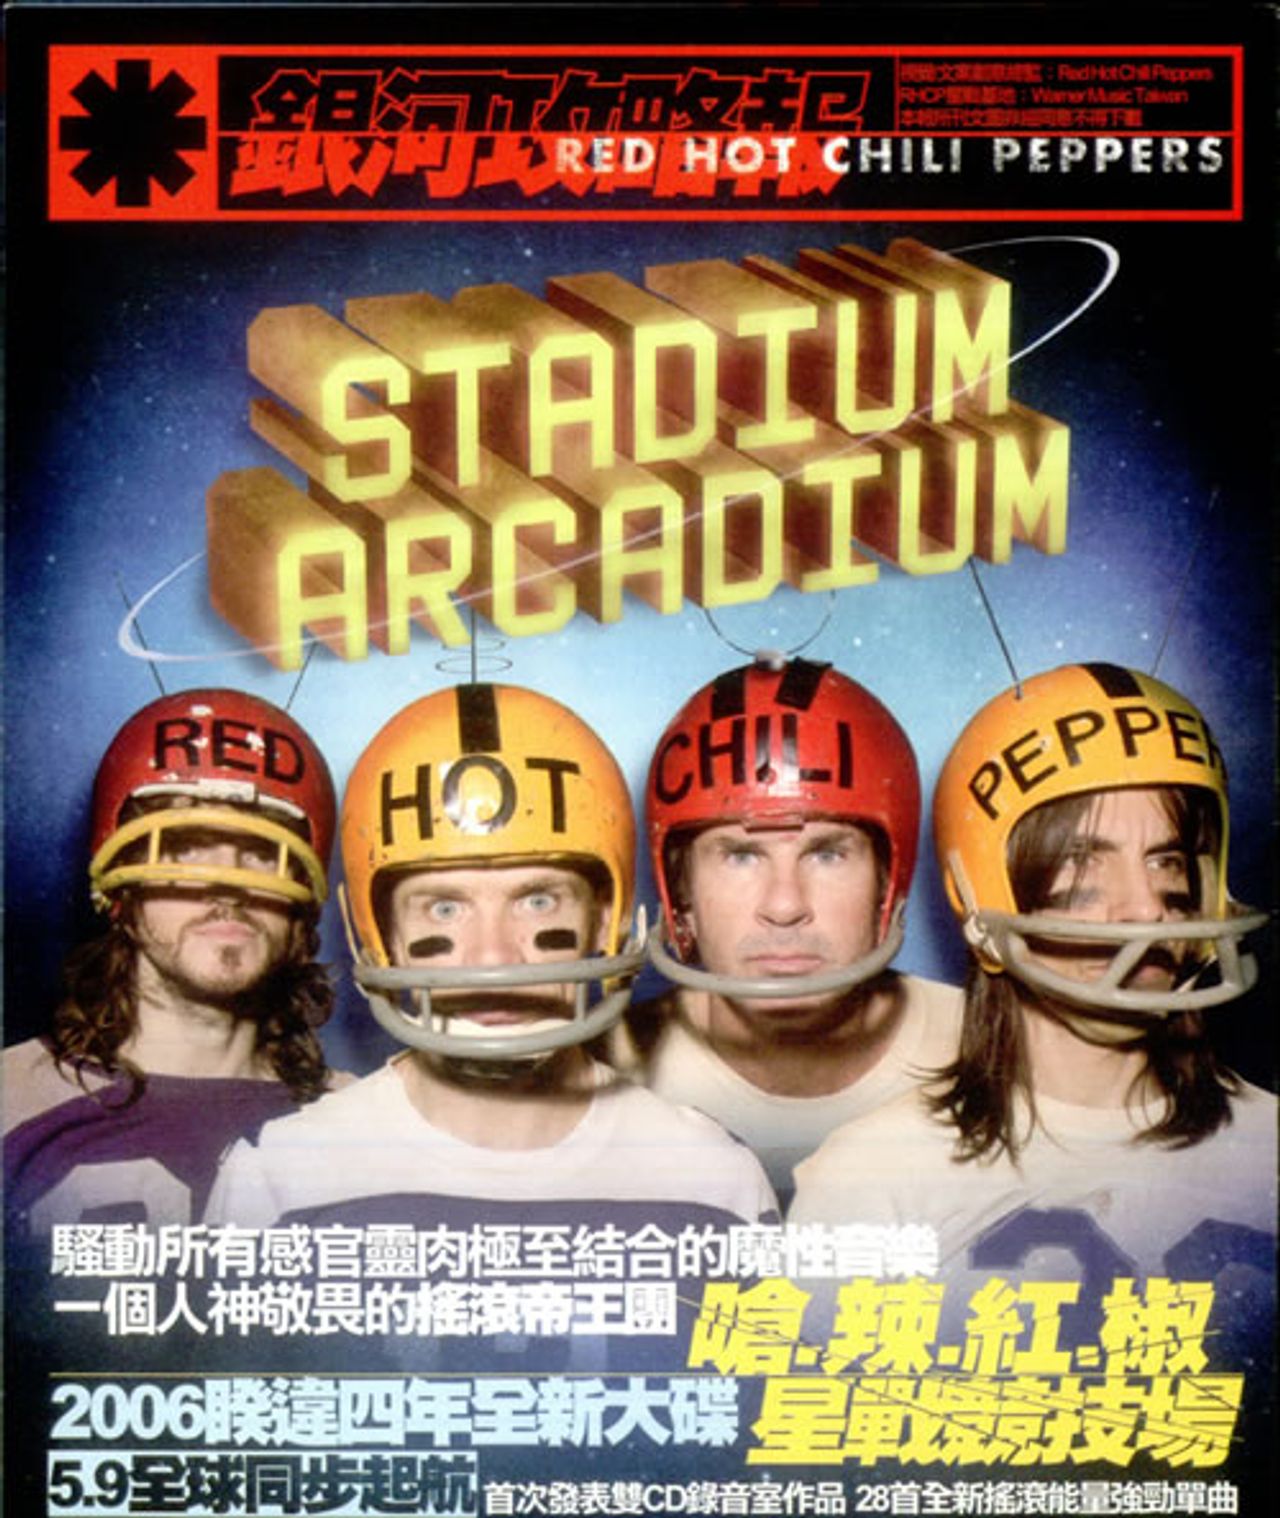 Red Hot Chili Peppers Arcadium Taiwanese Promo Handbill — RareVinyl.com